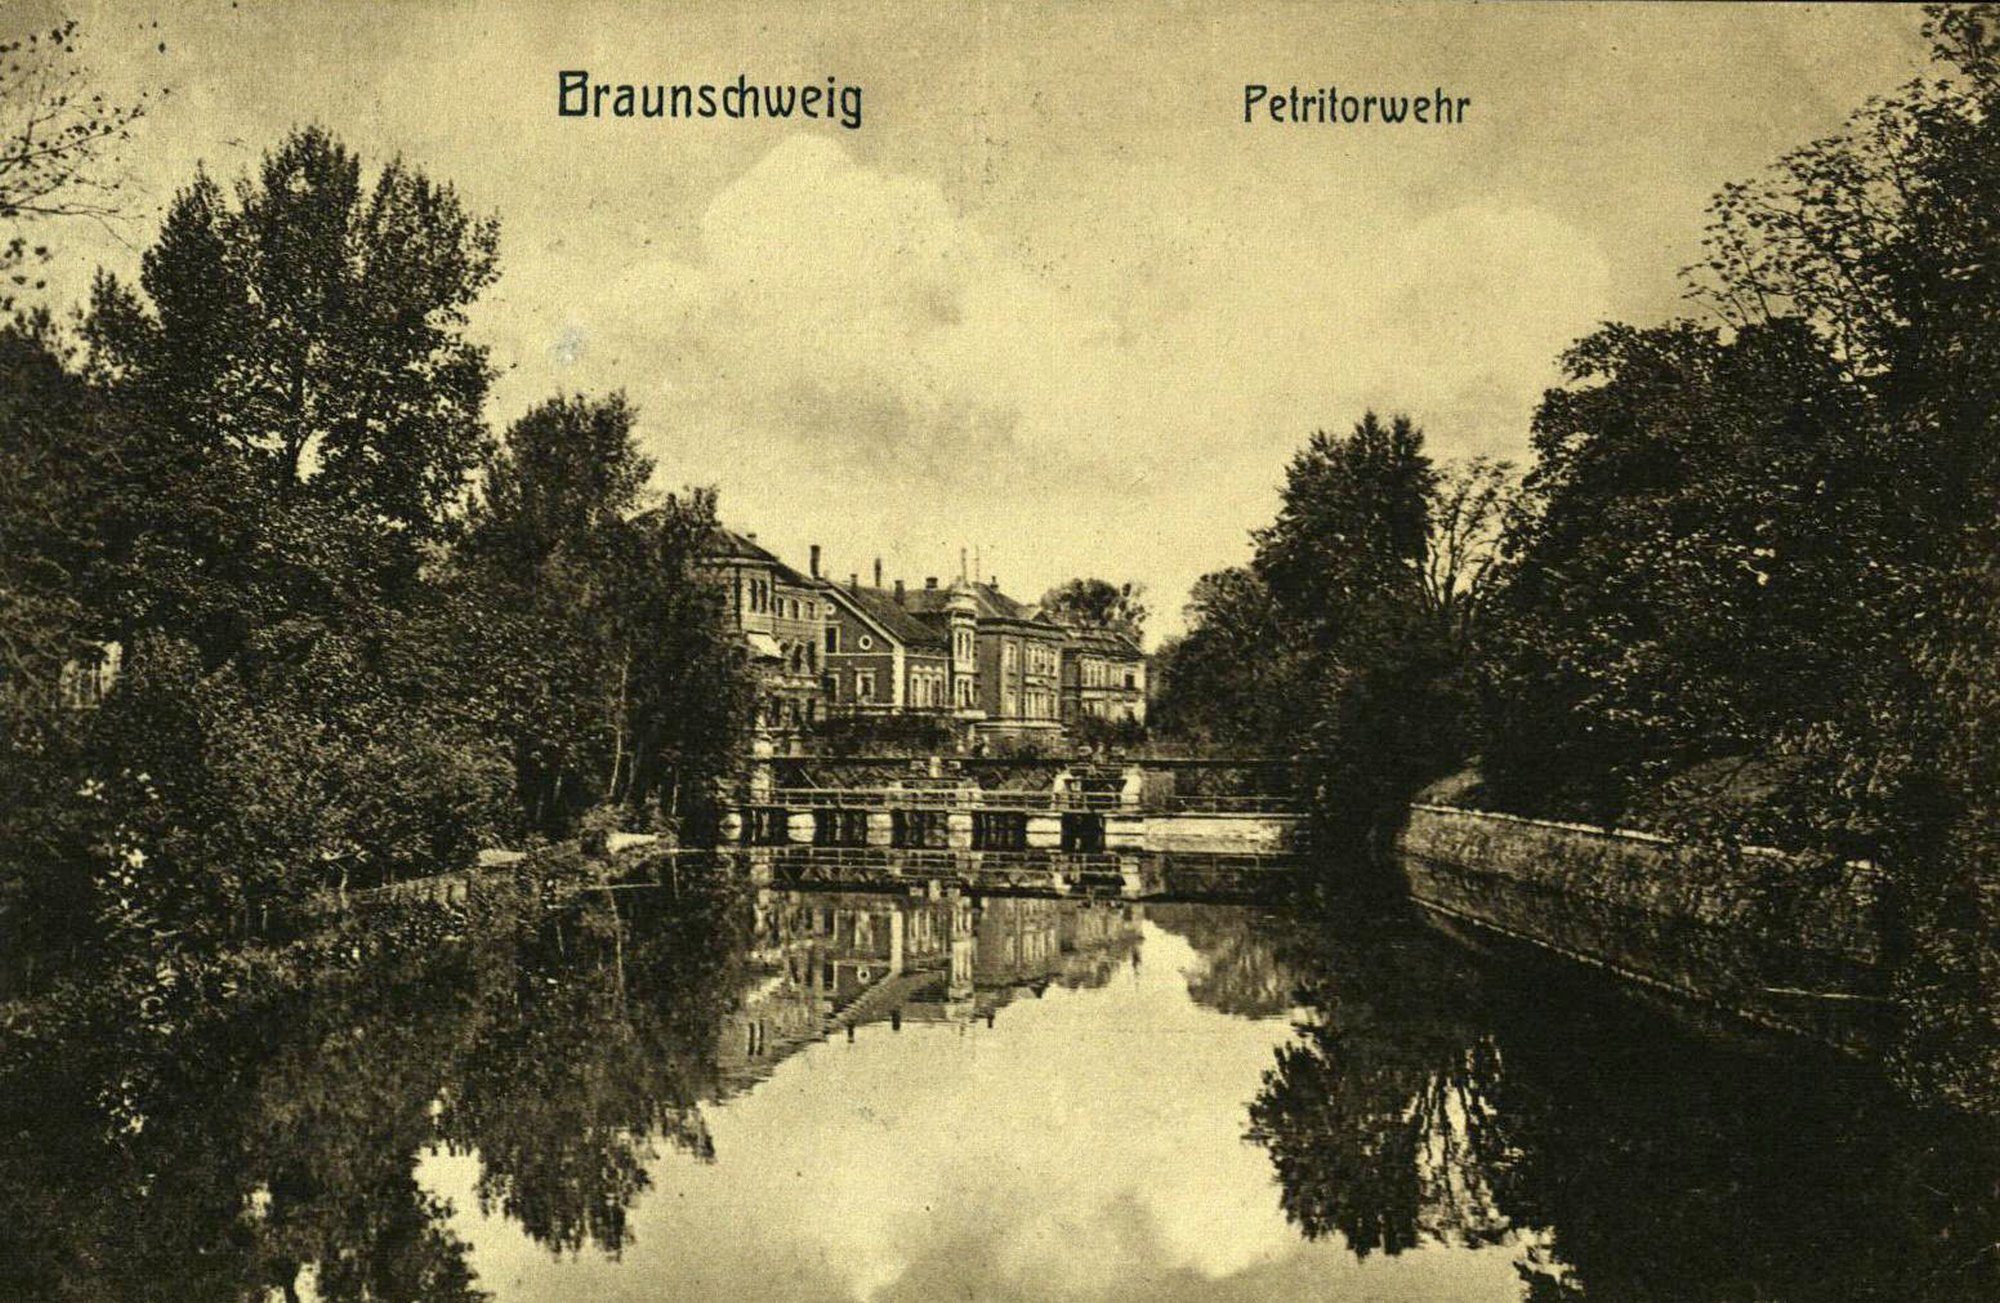 Petriwehrbrücke, Südwestansicht, um 1900 (Wird bei Klick vergrößert)